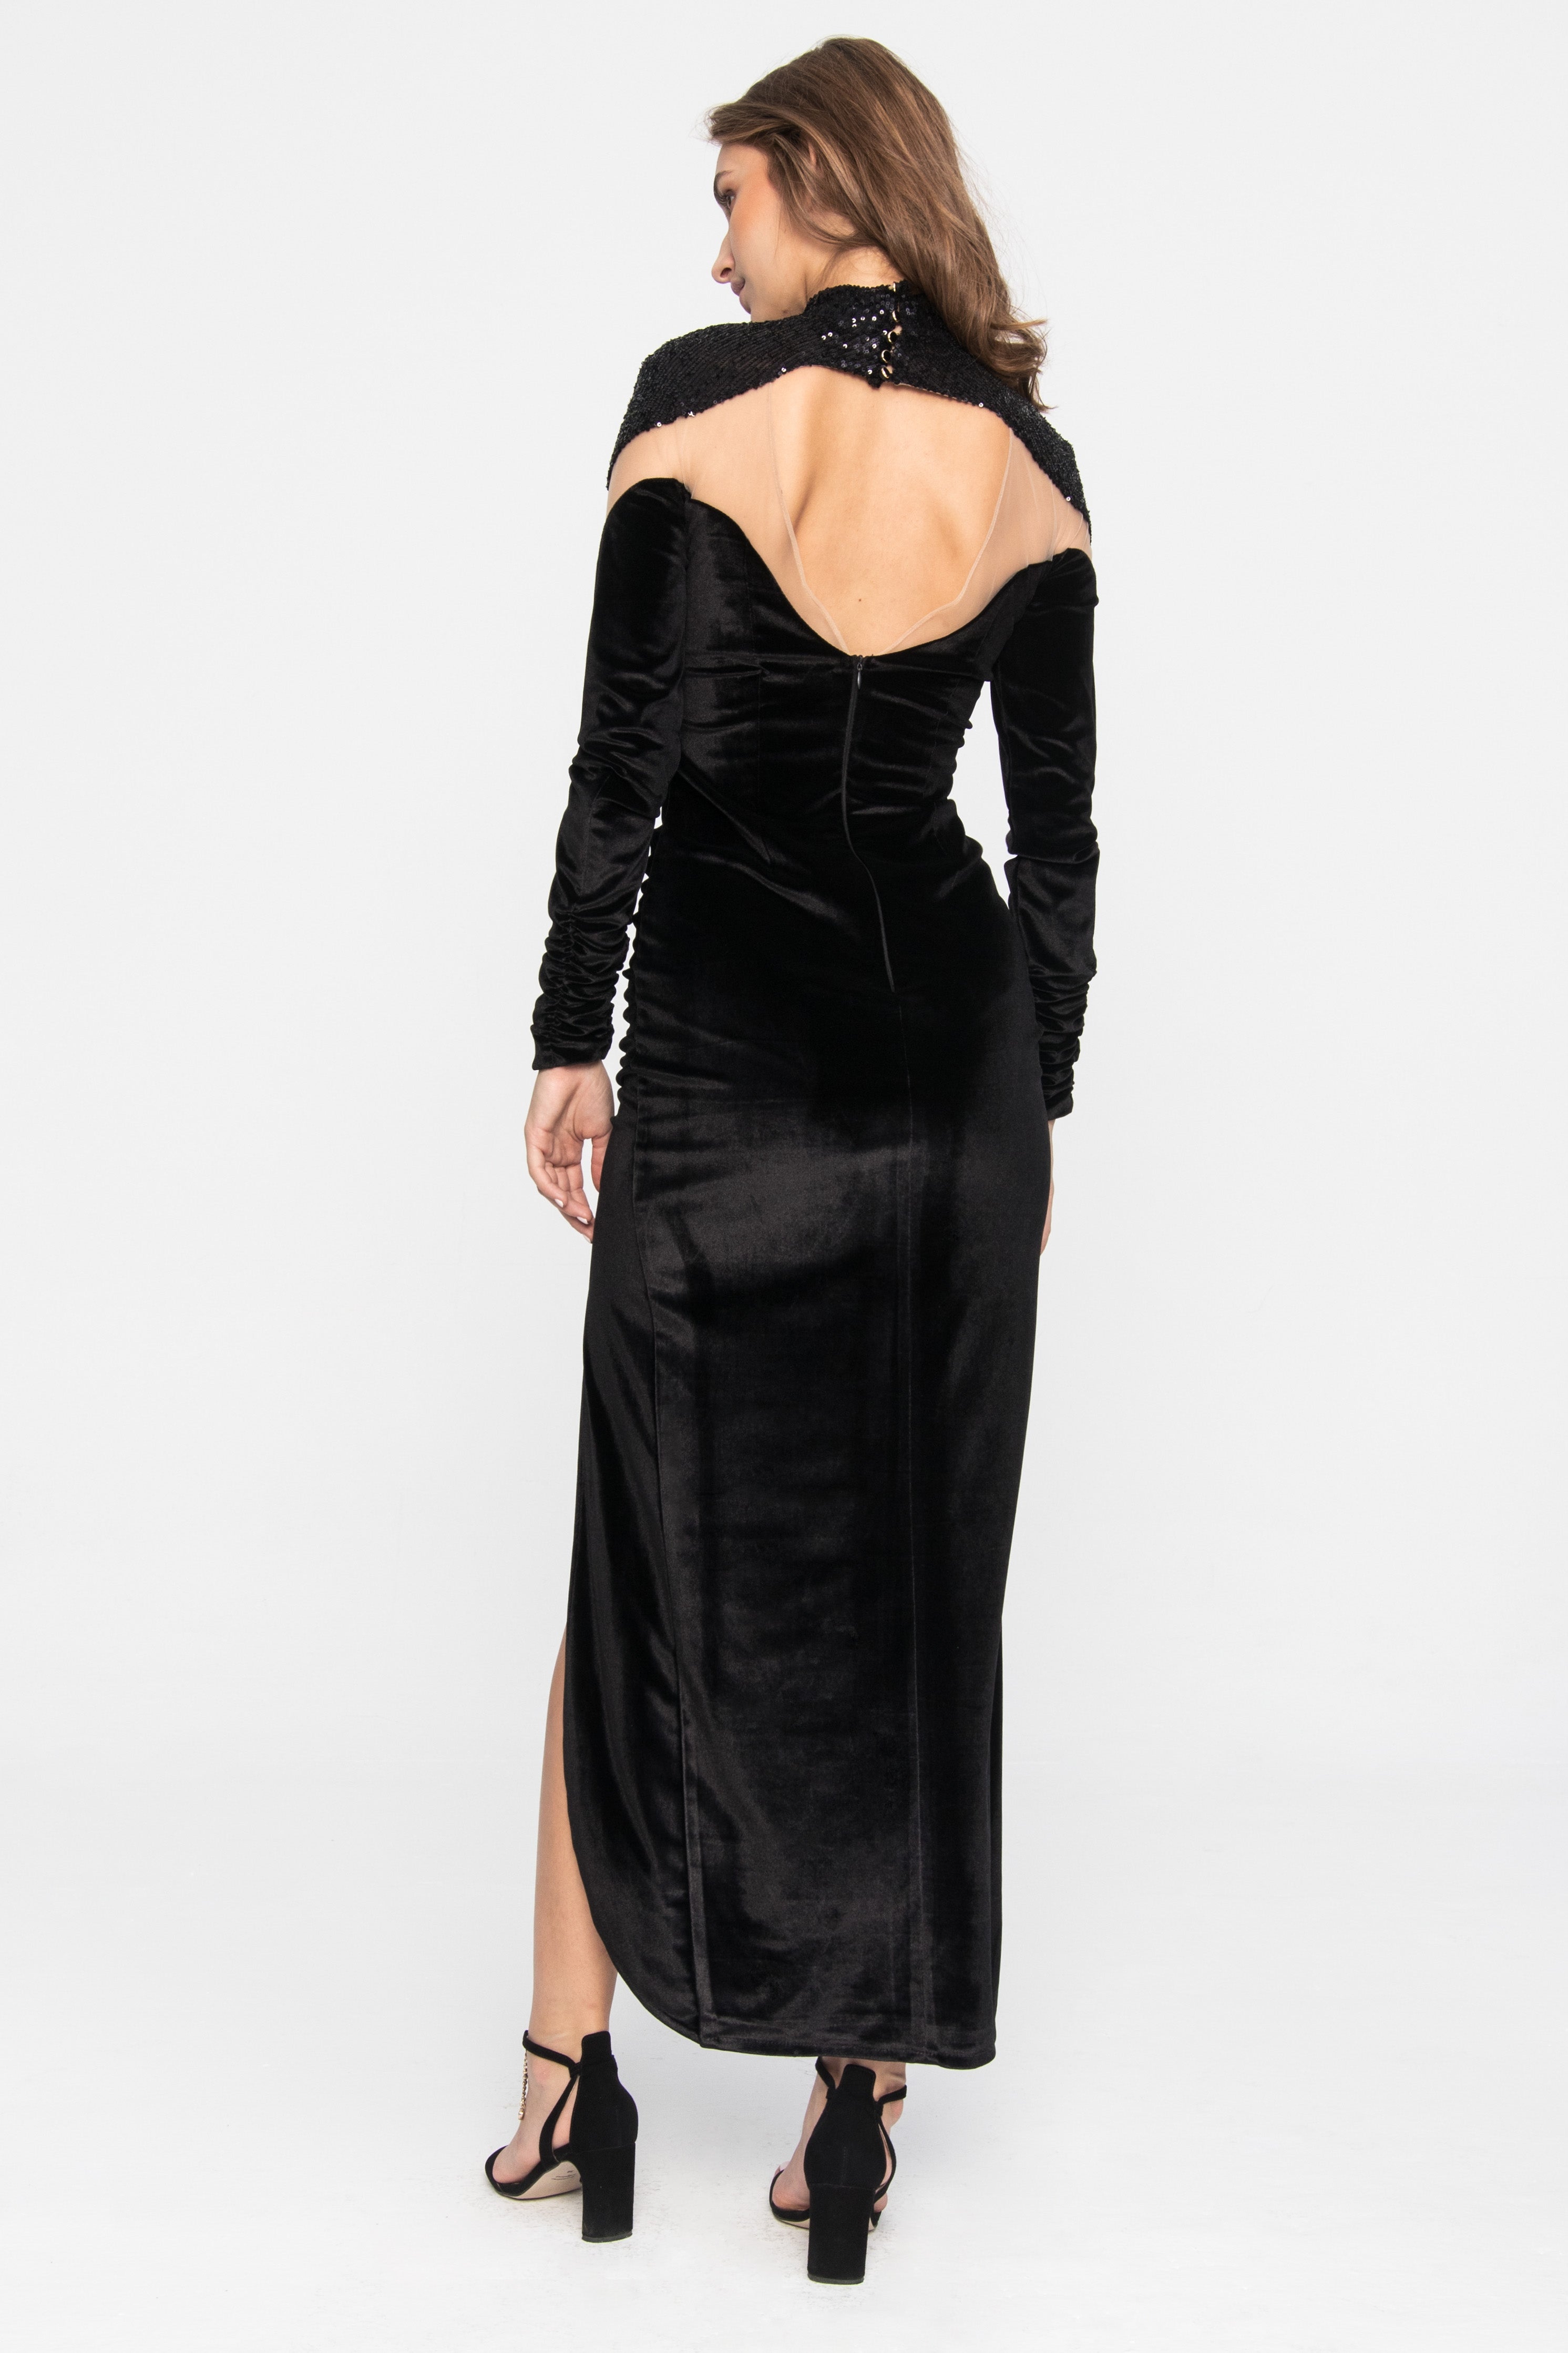 Velvet Evening dress with sequins